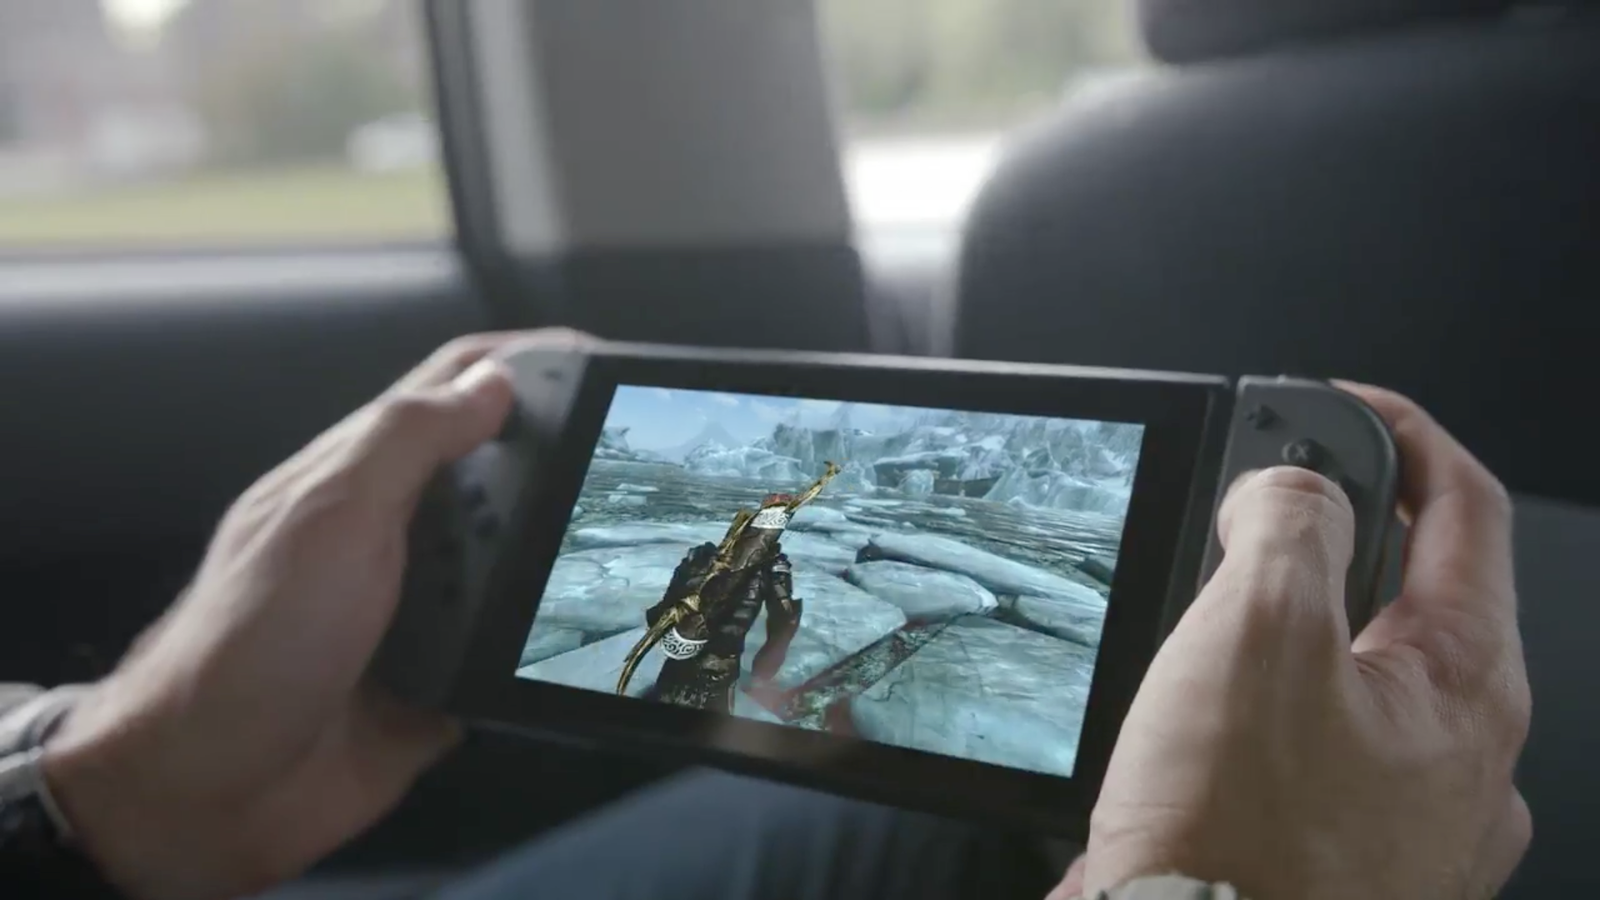 Skyrim being played in Handheld mode.